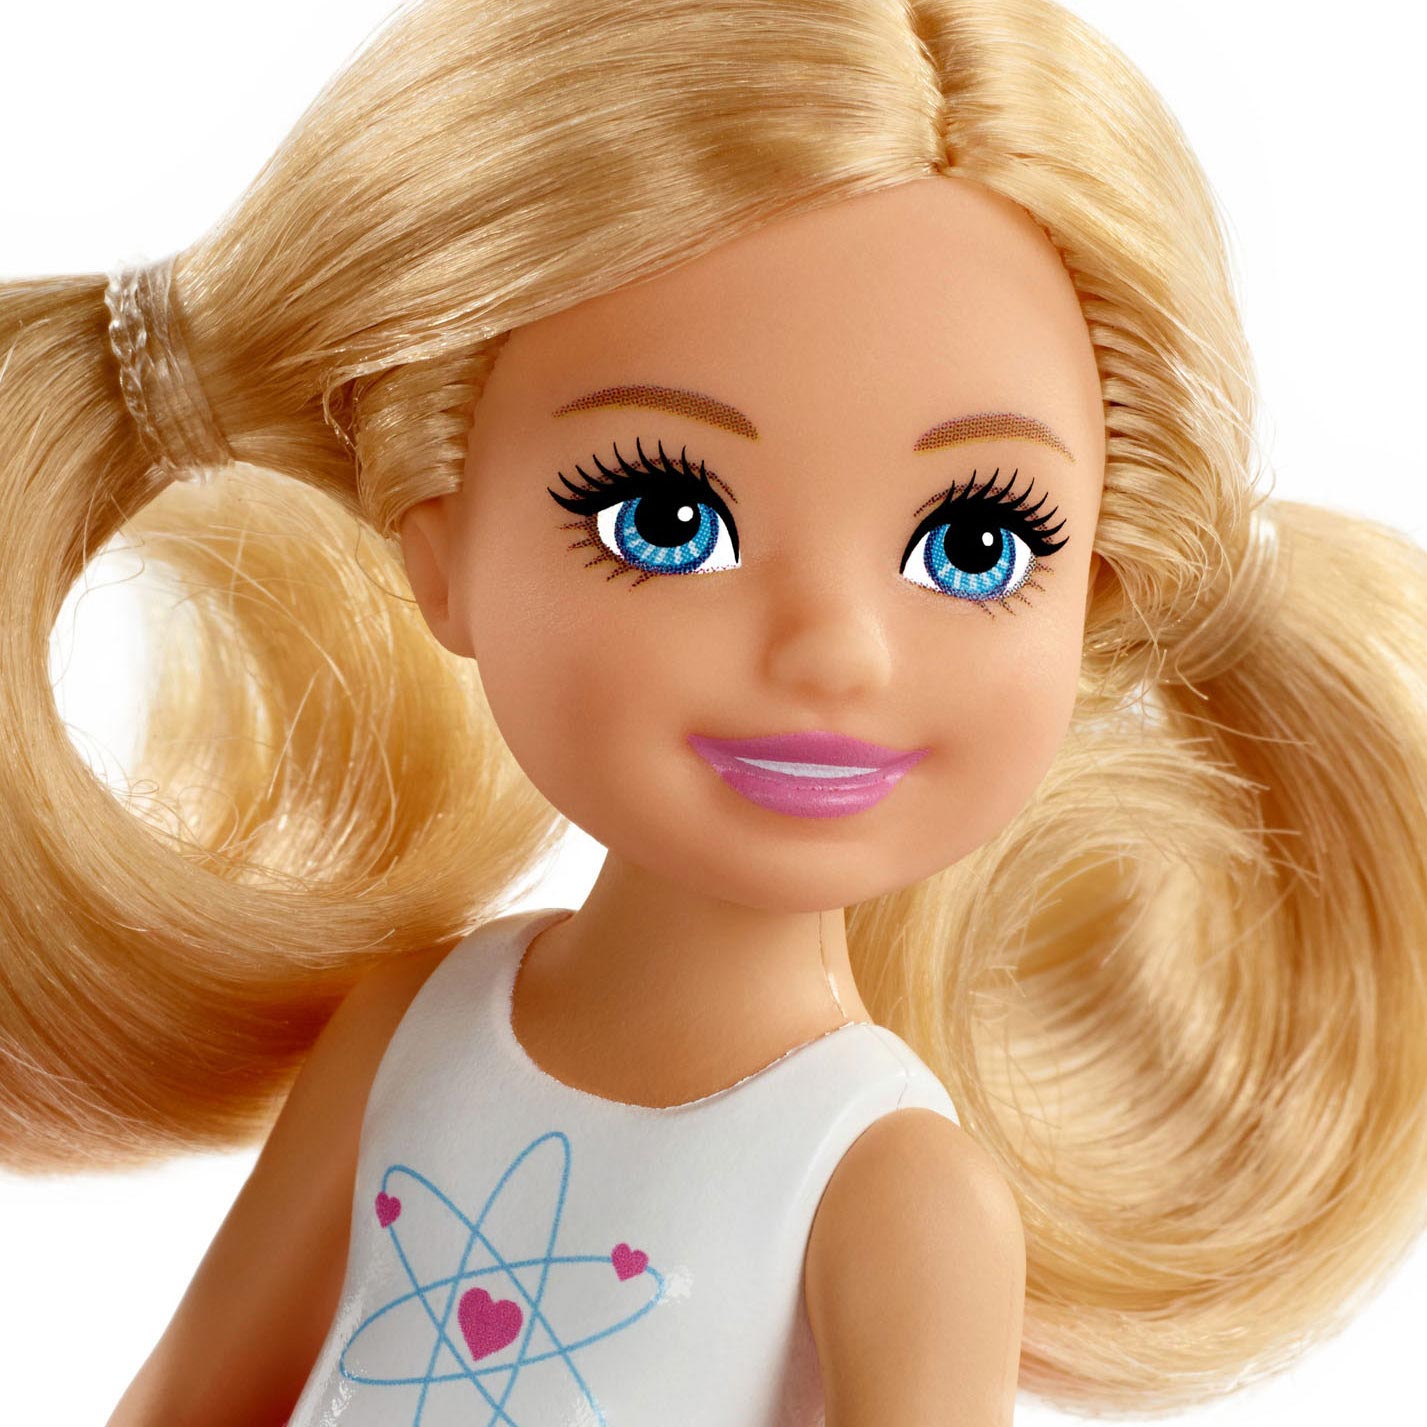 Barbie Chelsea - Reisplezier